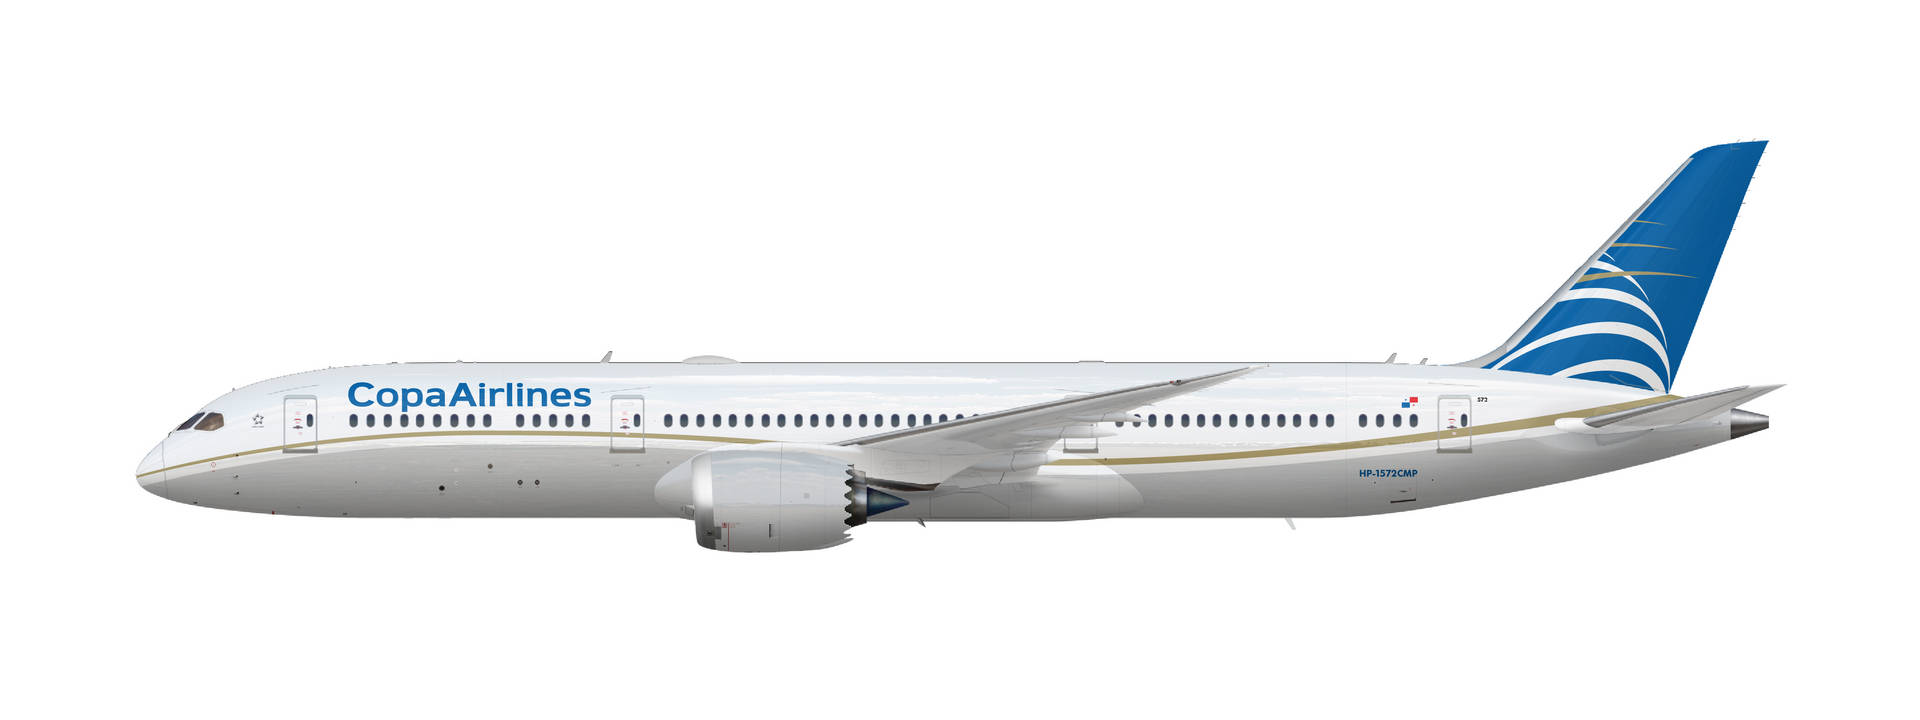 Copa Airlines Plane In White Wallpaper